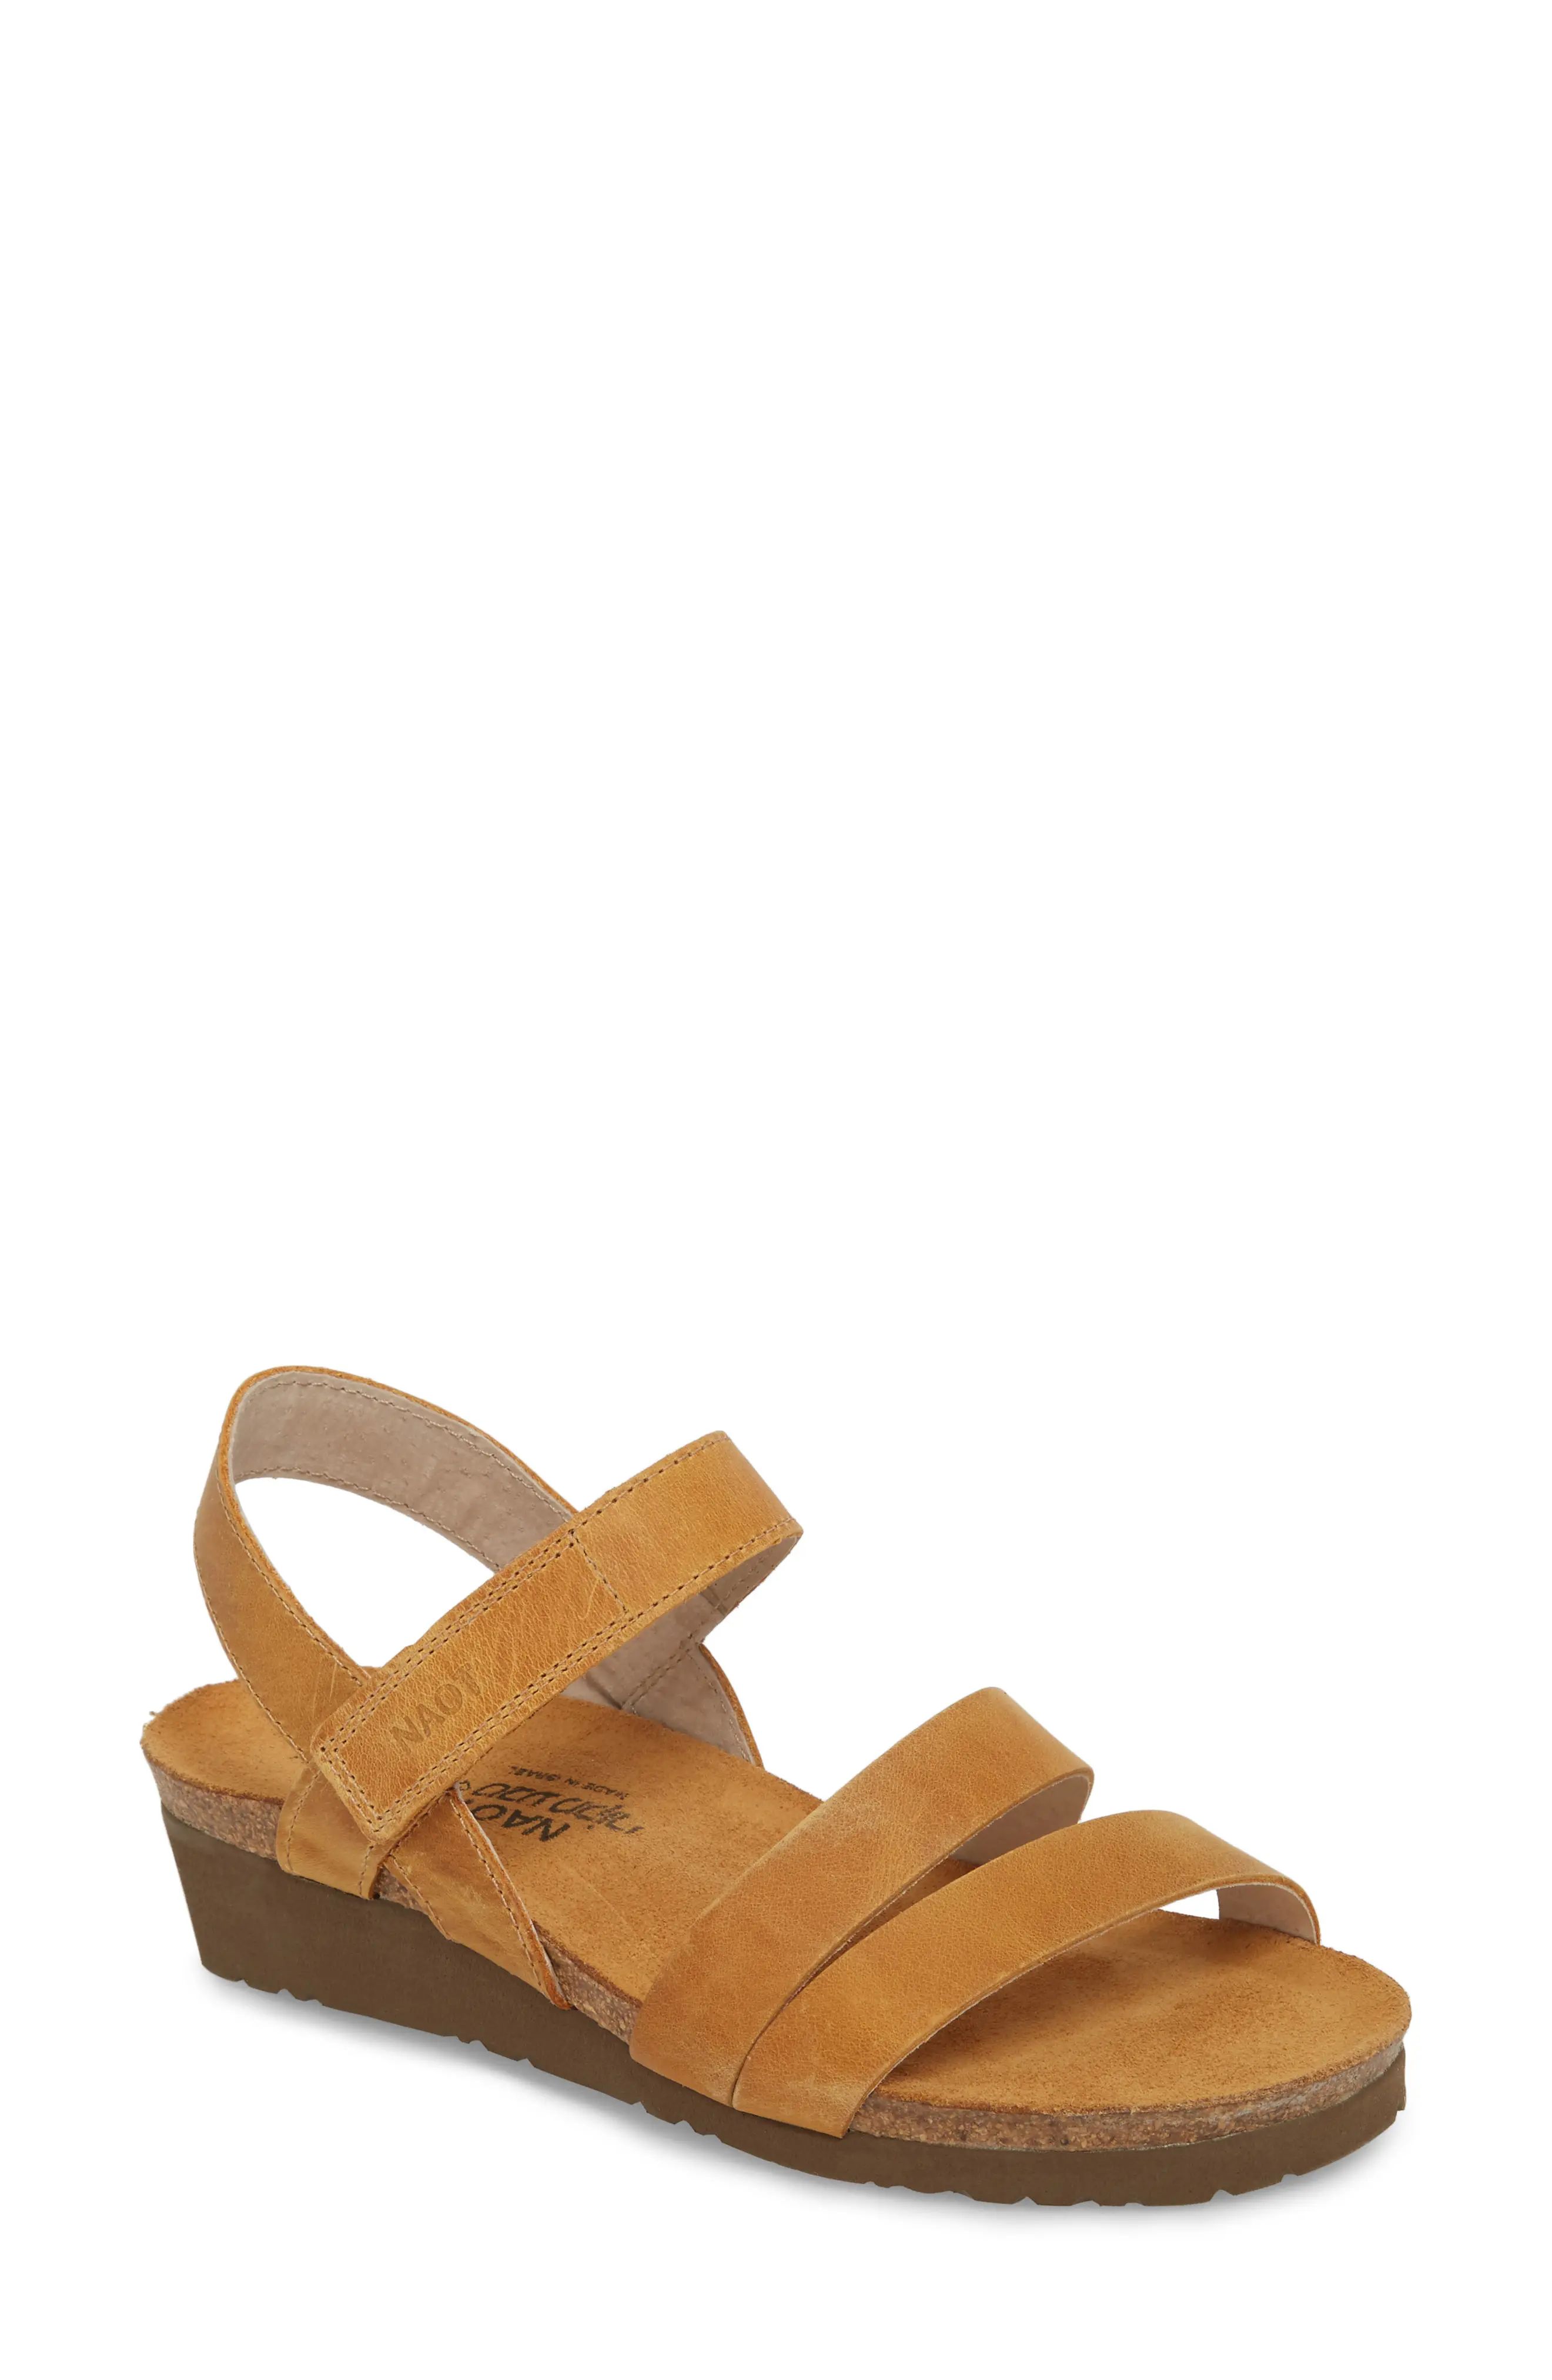 Women's Naot Kayla Wedge Sandal, Size 5US - Beige | Nordstrom